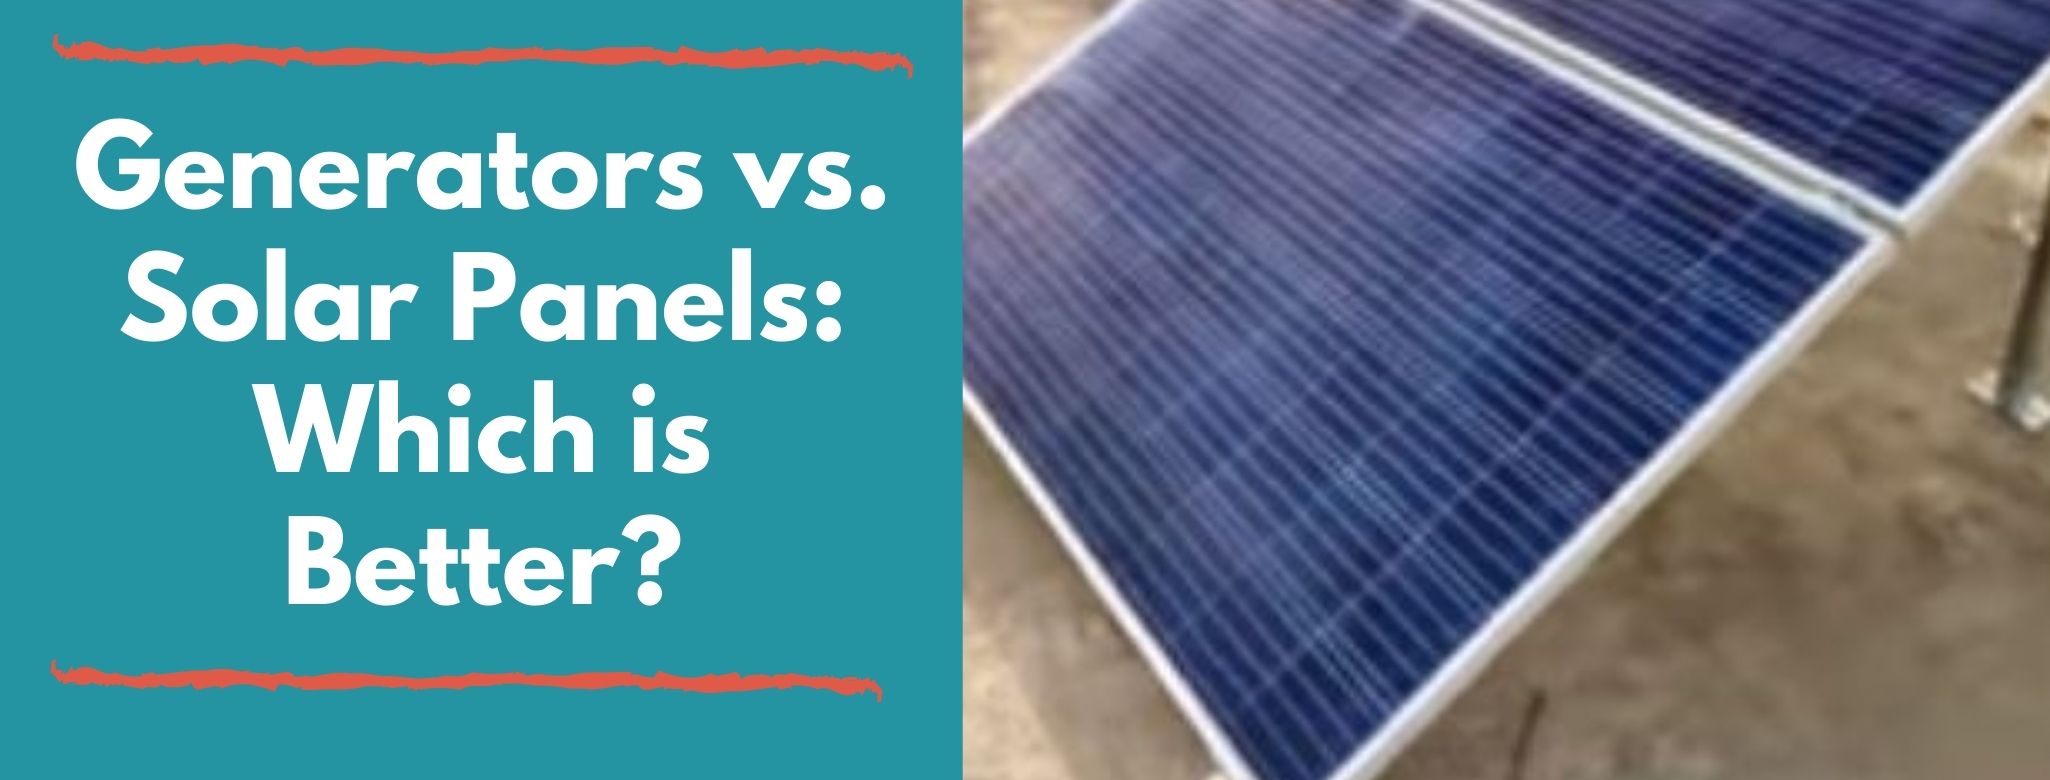 Generators vs. Solar Panels Which is Better?